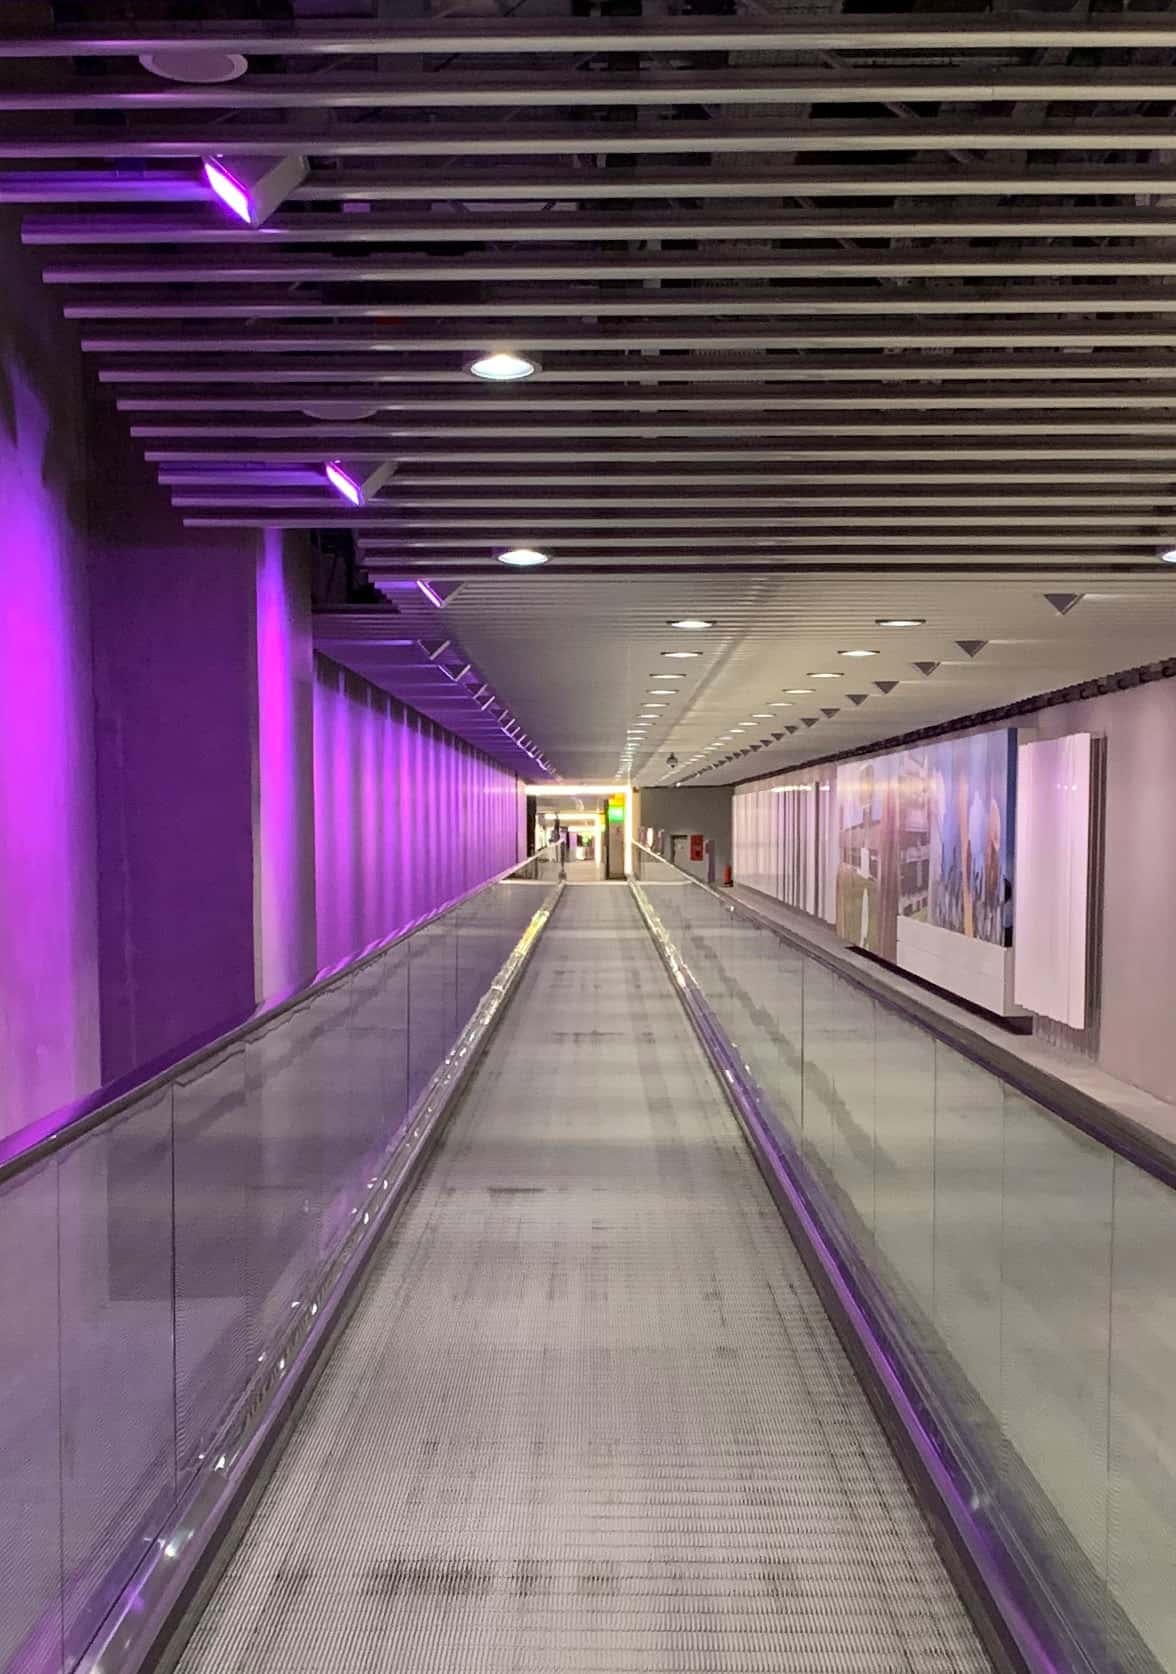 Photo of a travelator in a long, empty corridor at Heathrow